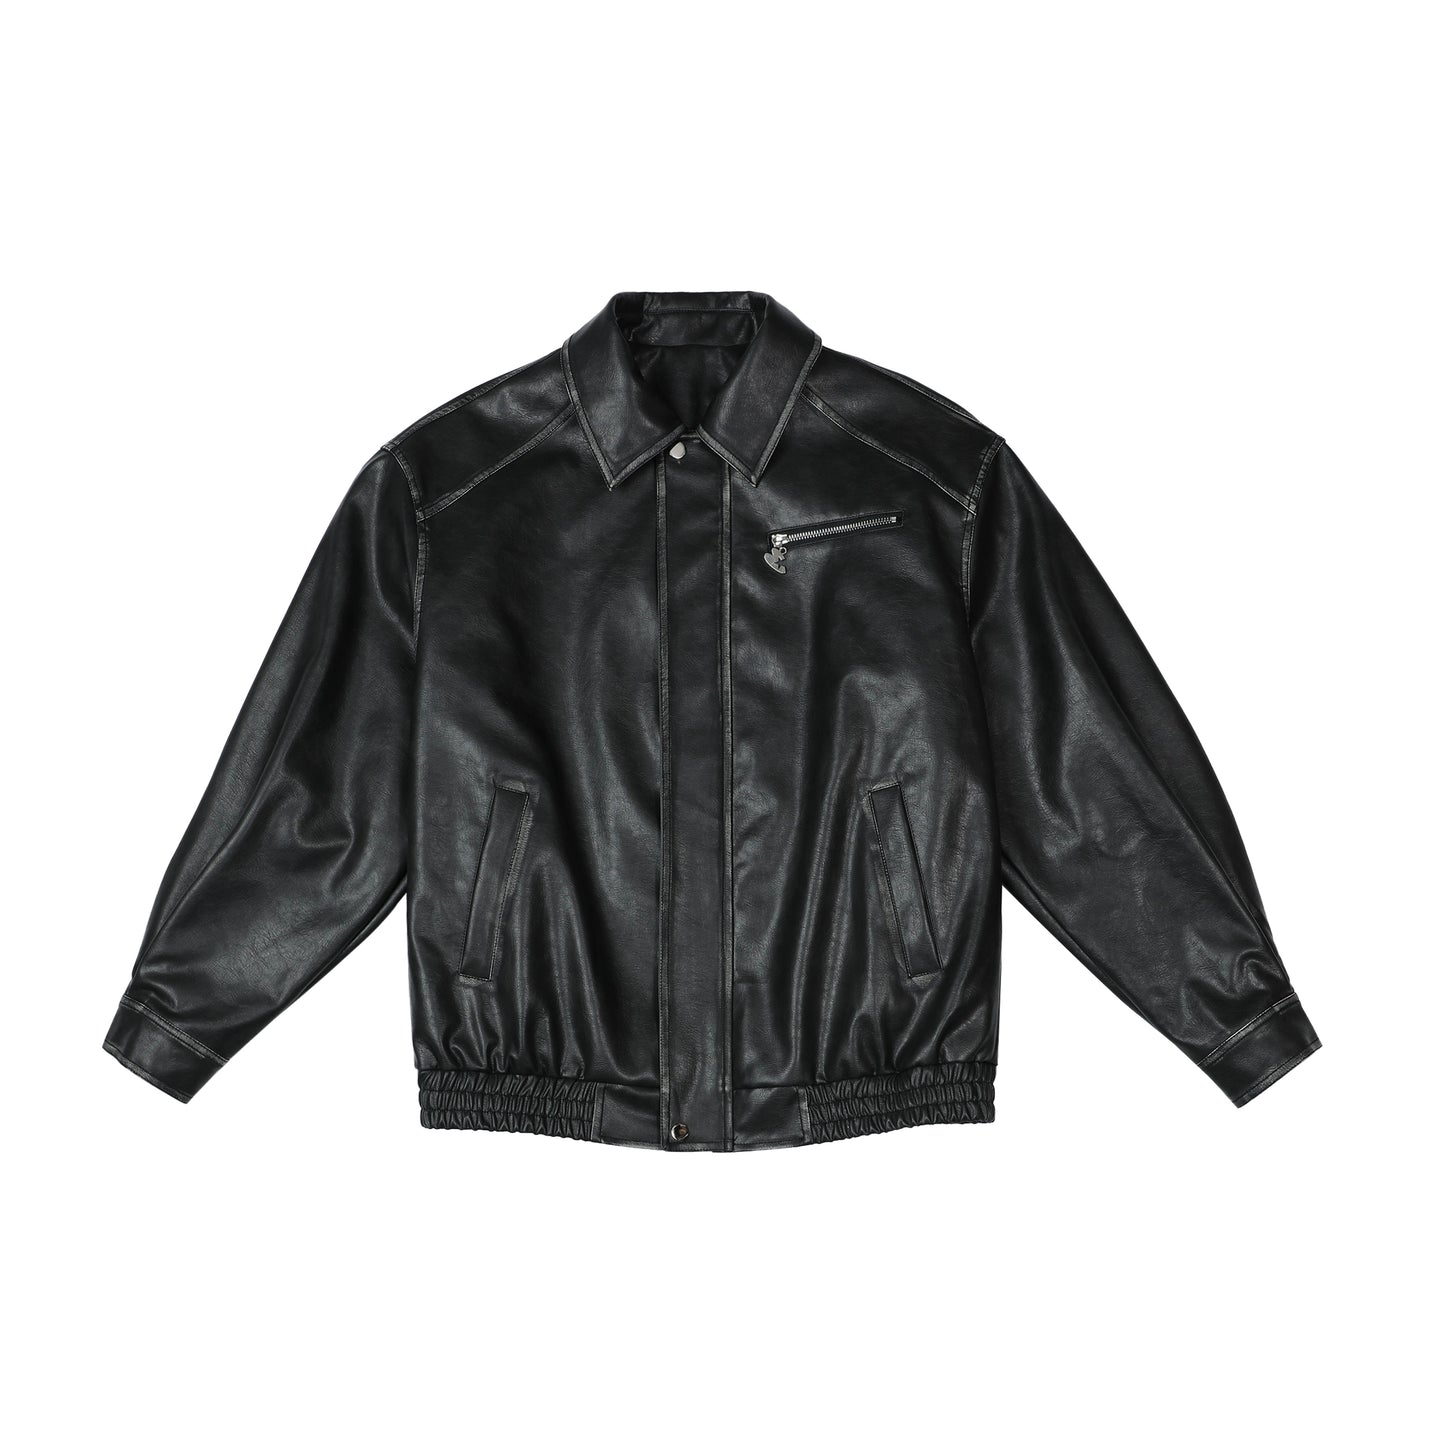 New American Leather Coat